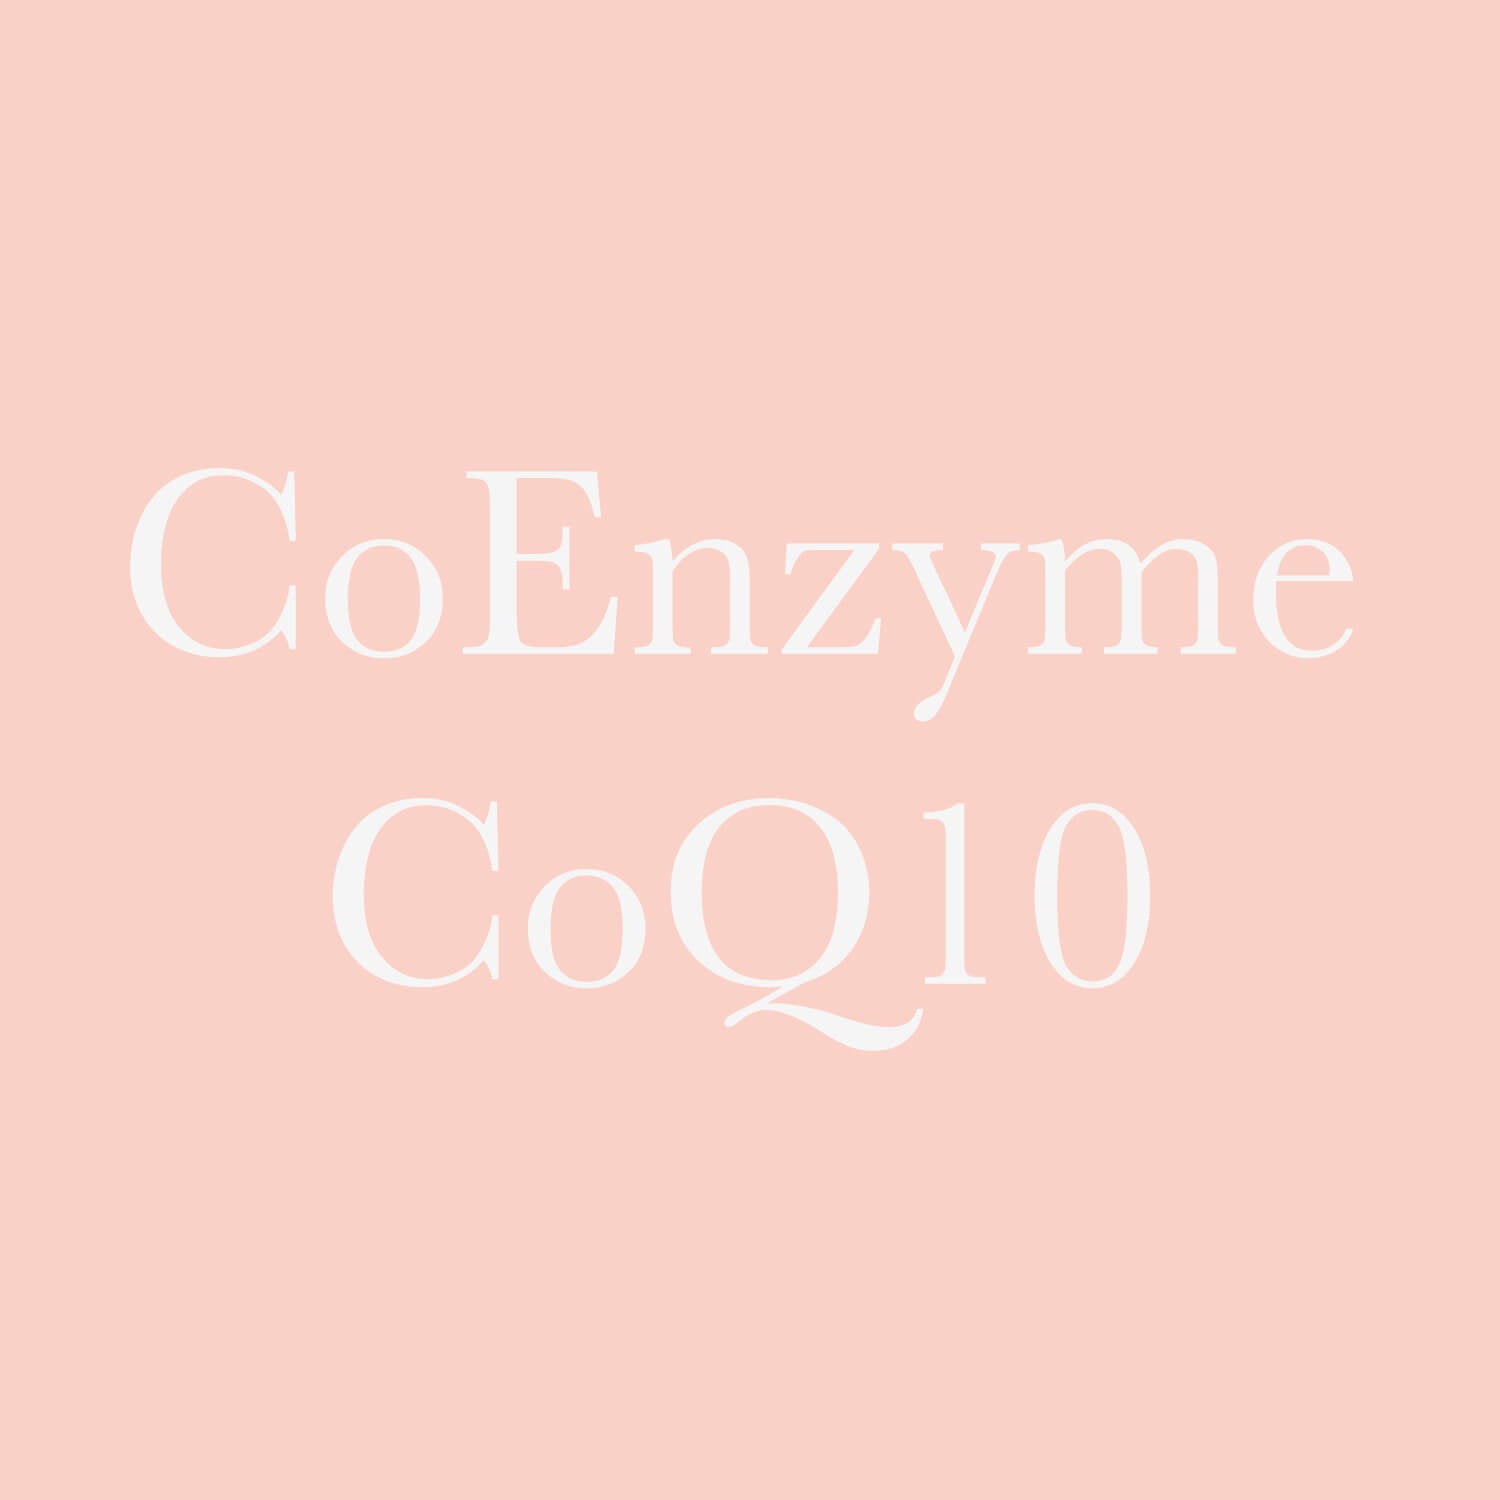 Coenzyme CoQ10